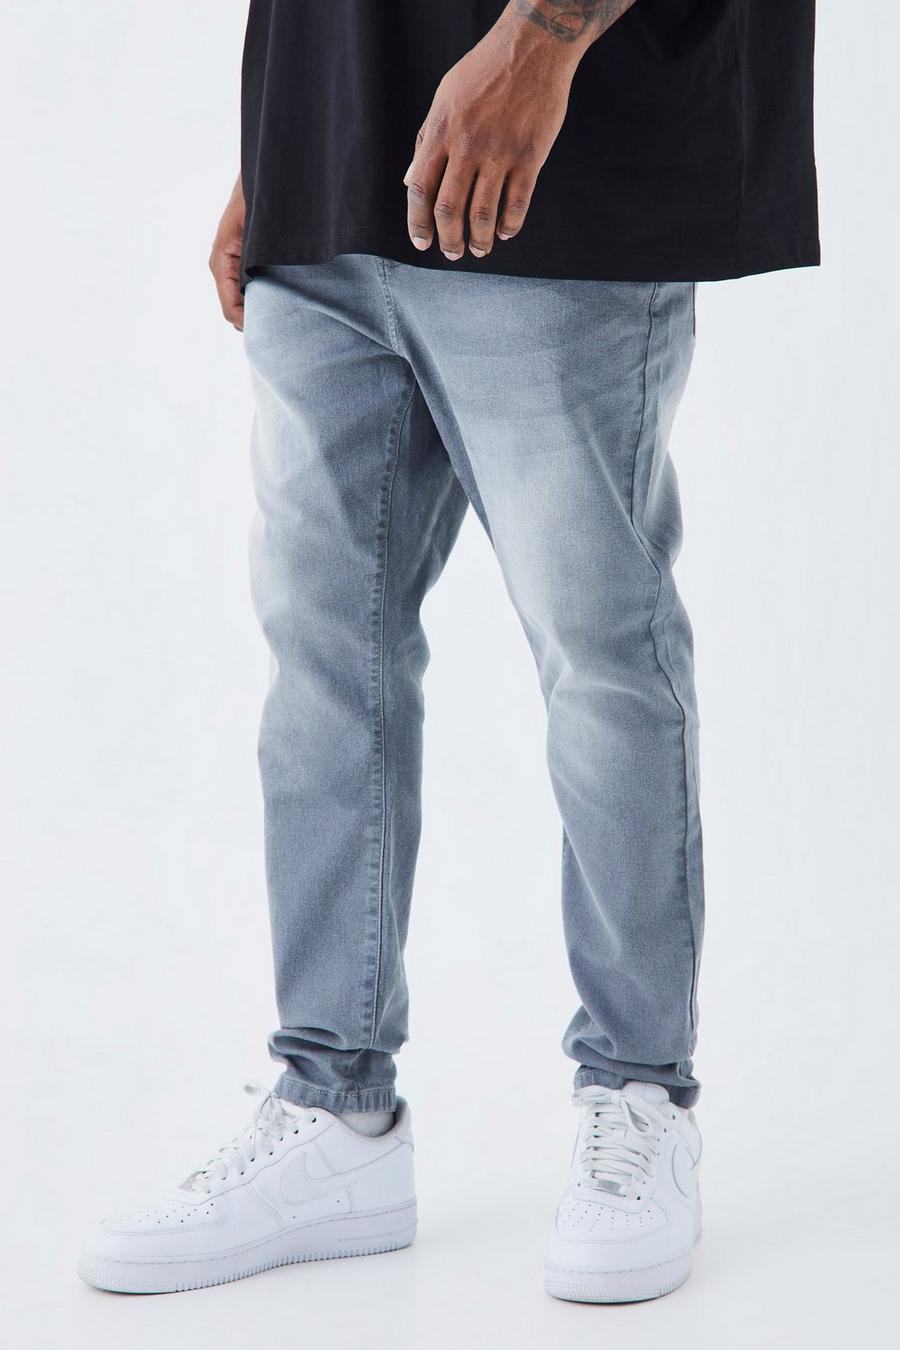 Grande taille - Jean stretch super skinny, Mid grey